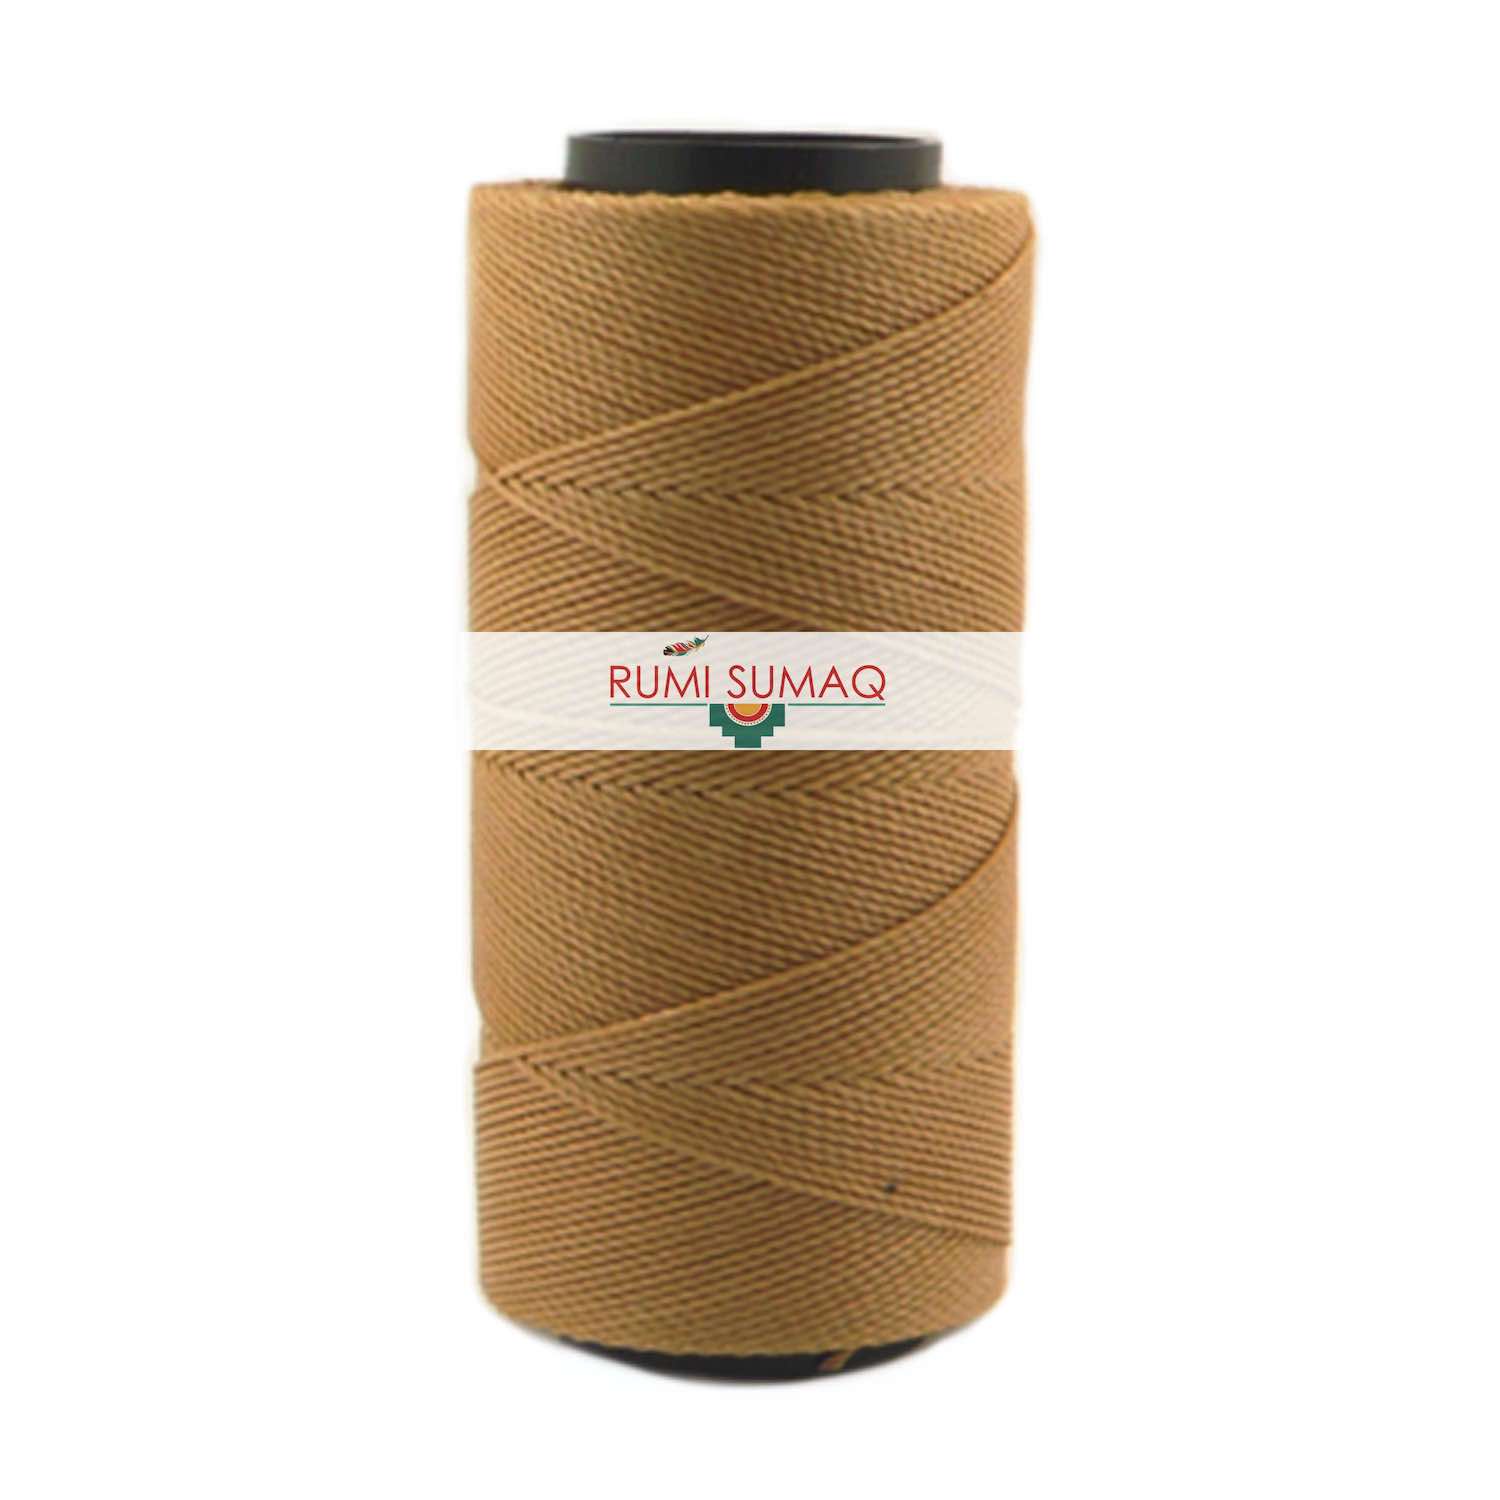 Settanyl 01-373 Paper Bag Brown Waxed Polyester Cord 1mm | RUMI SUMAQ Waxed Thread